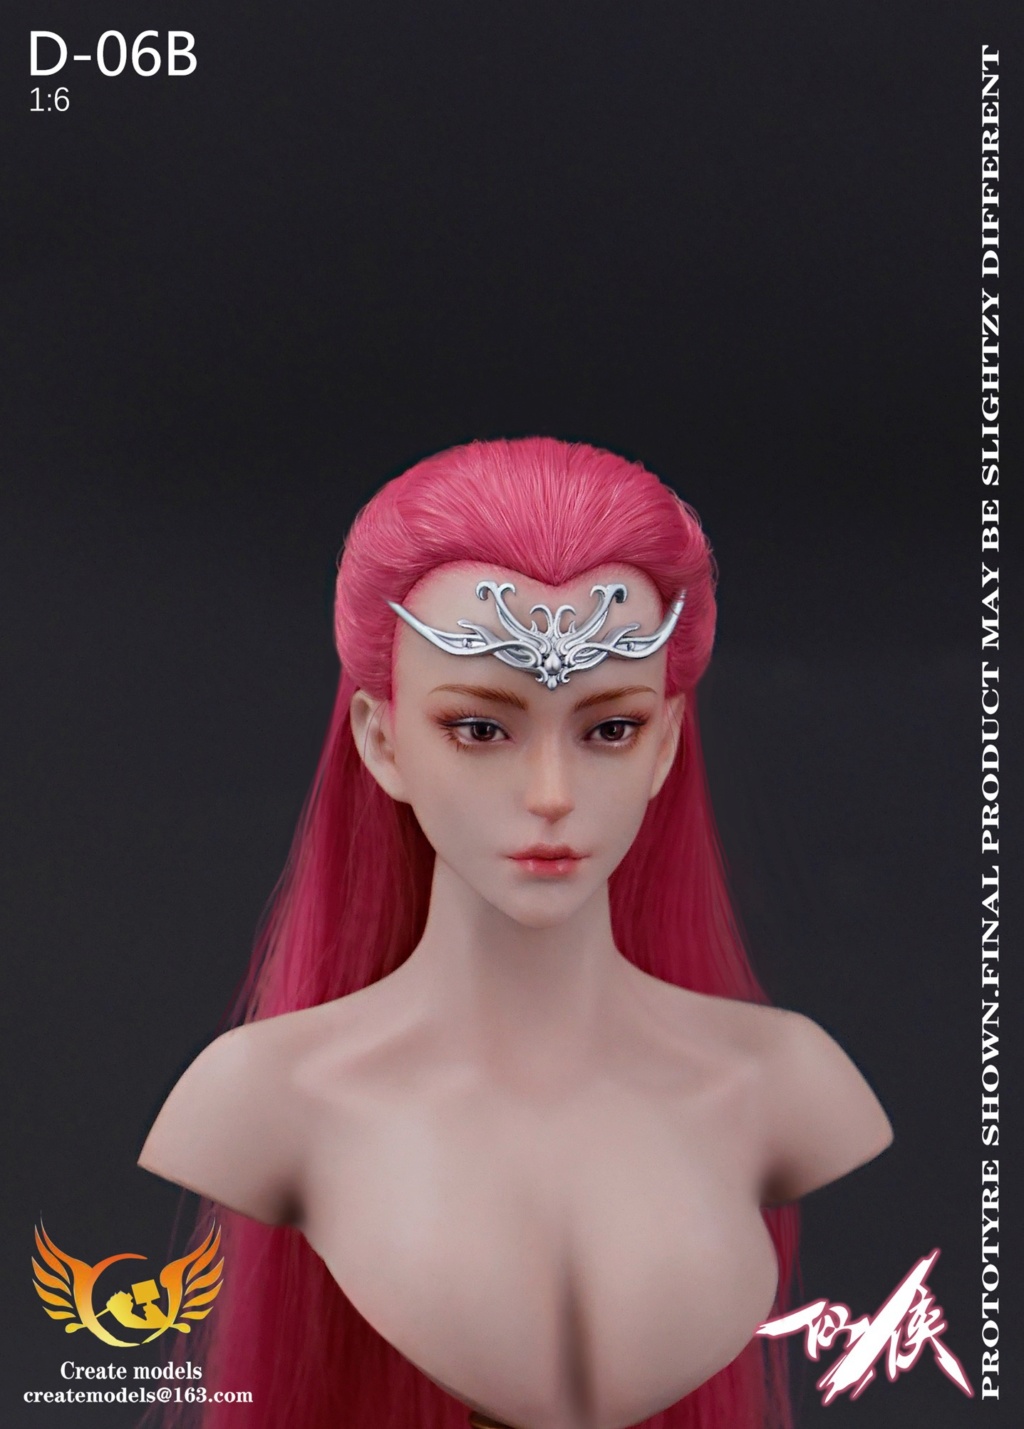 headsculpt - NEW PRODUCT: Createmodels: 1/6 Xianxia series female head - AB two hair colors (D-06) 15340110